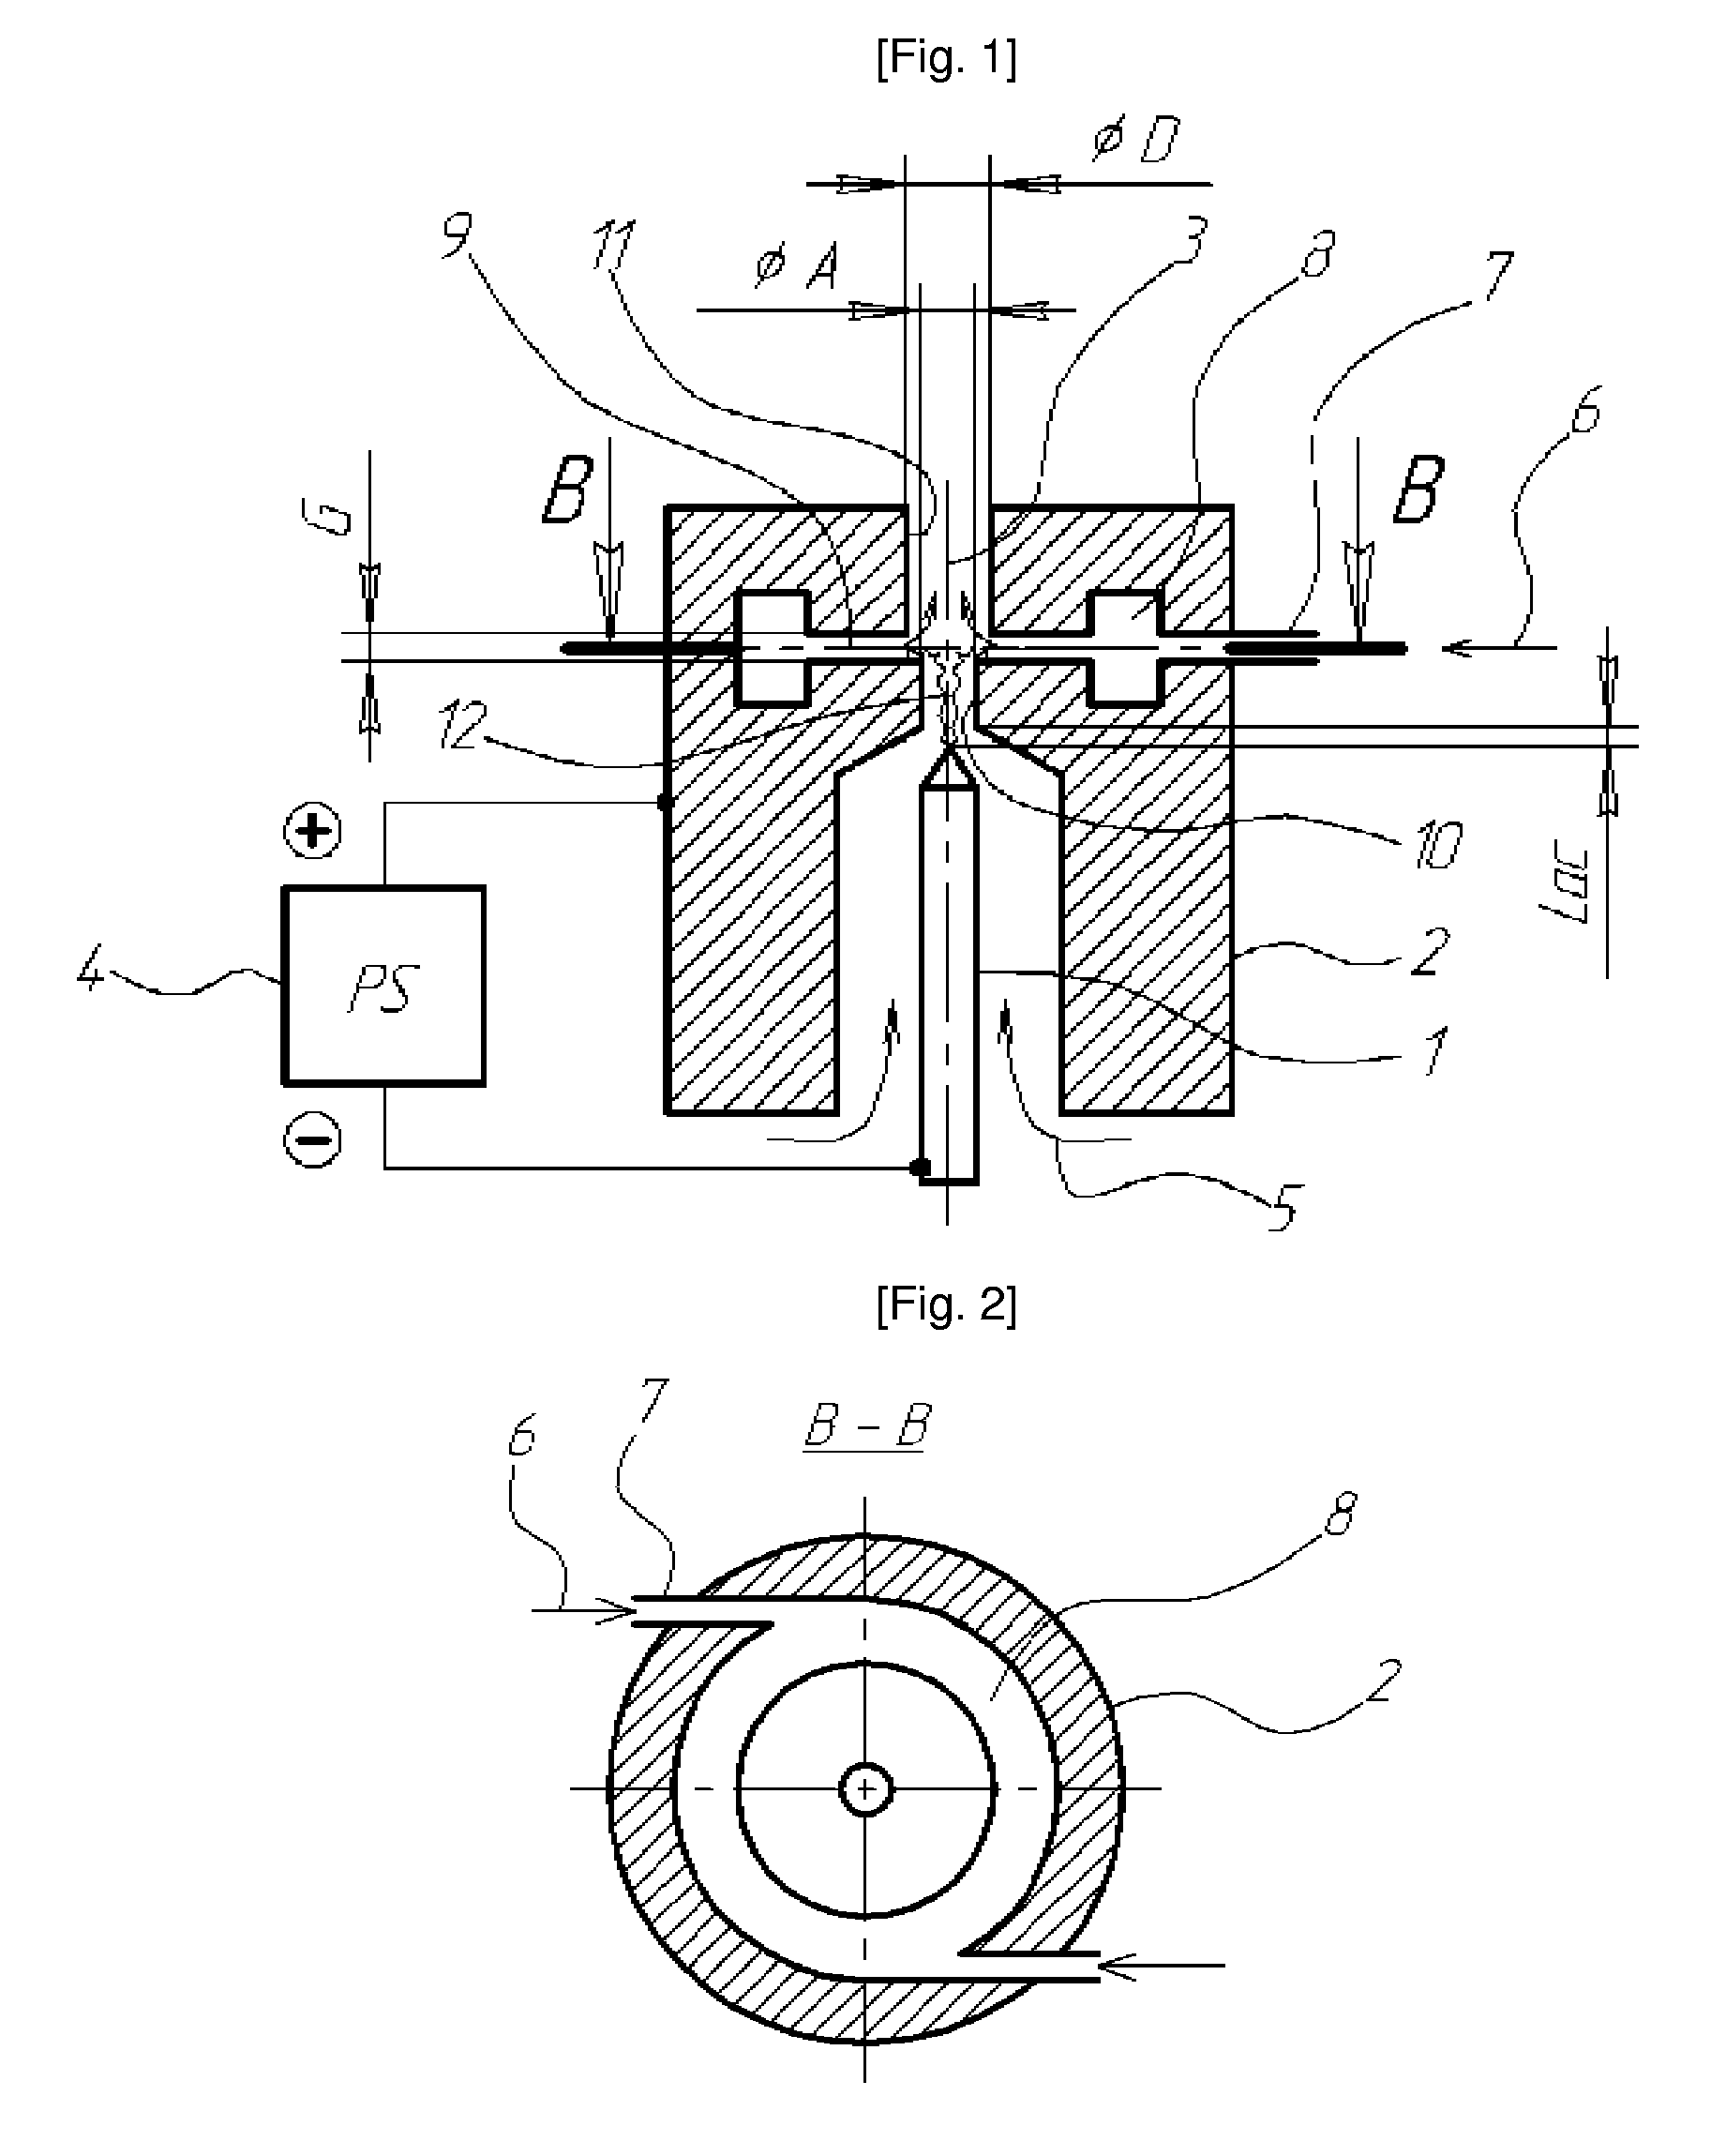 DC arc plasmatron and method of using the same